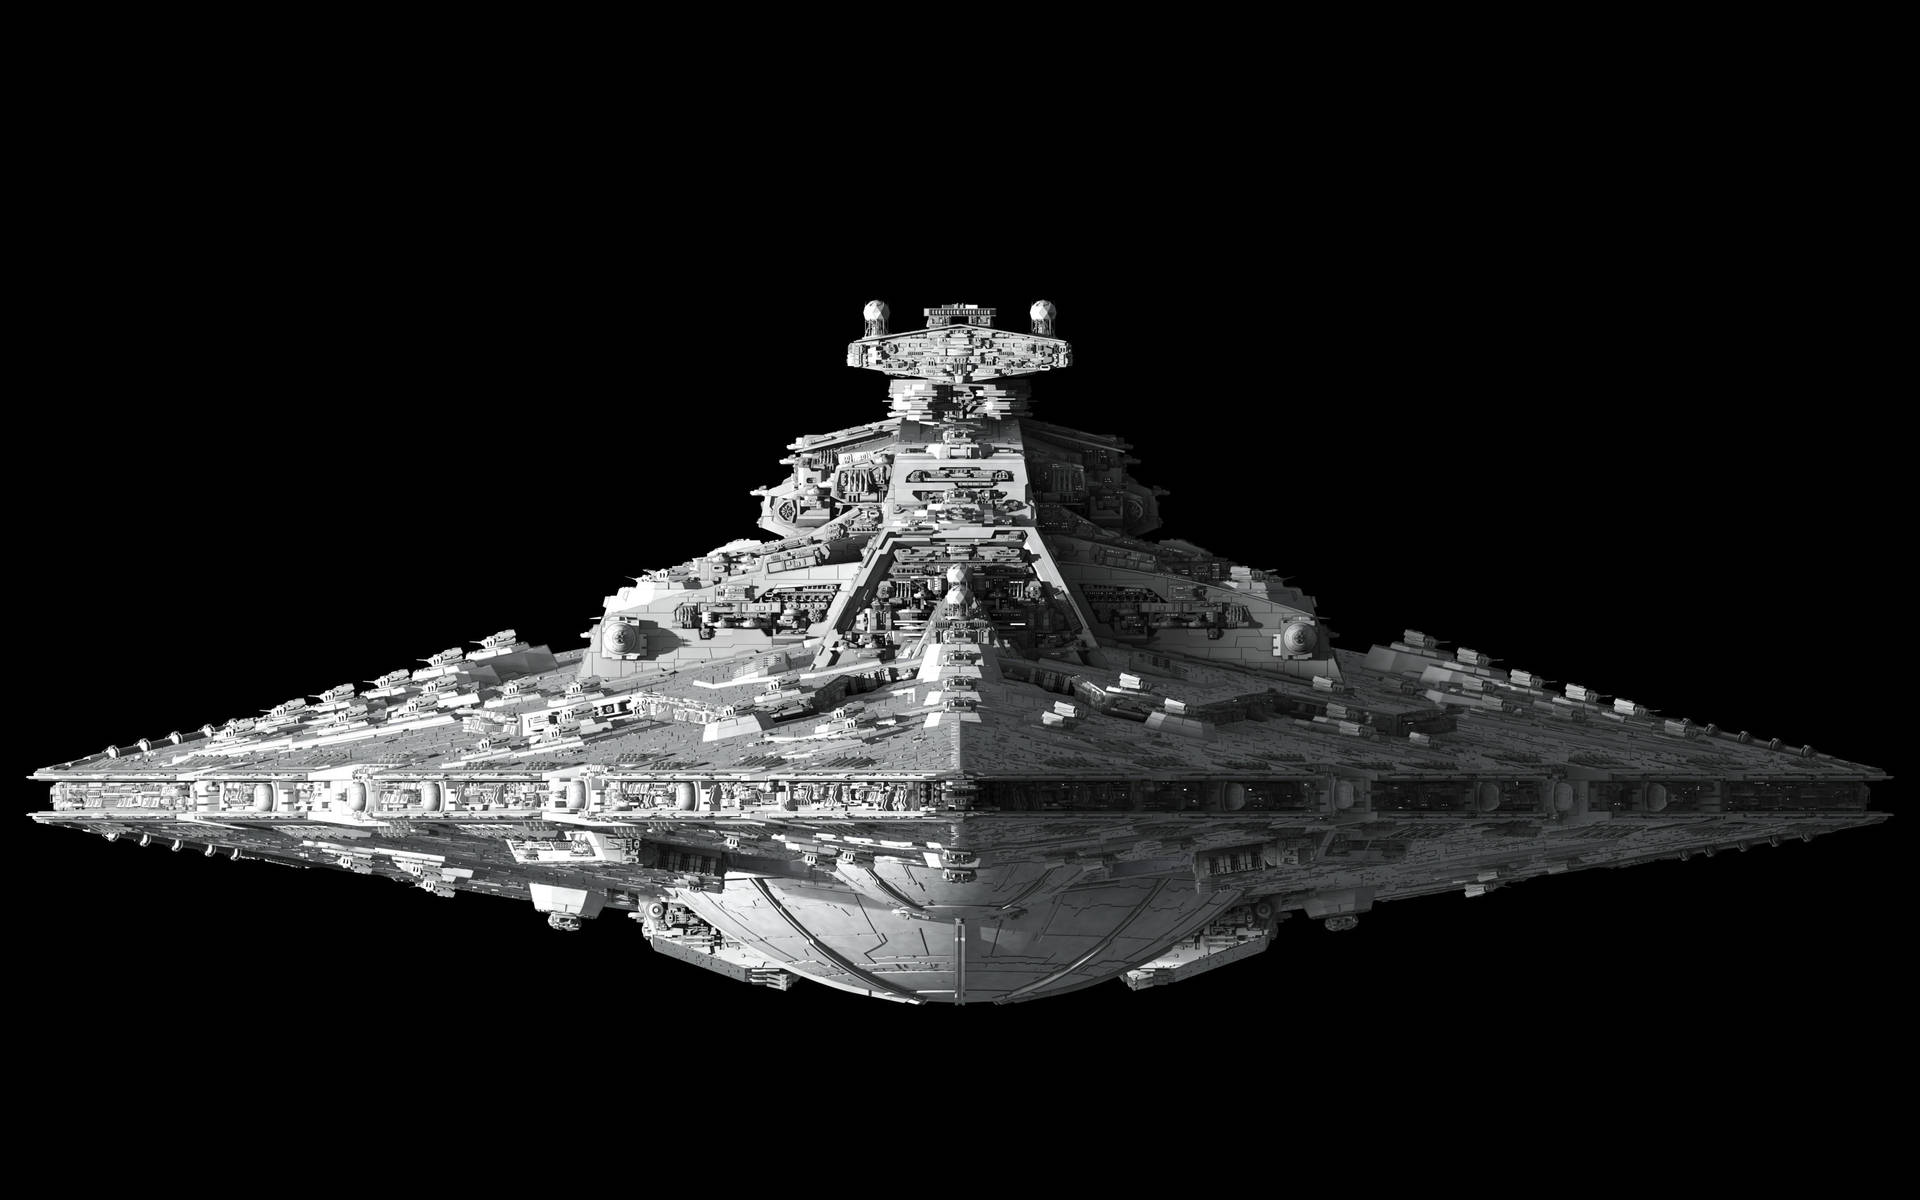 4kstar Wars Imperial Star Destroyer Wallpaper